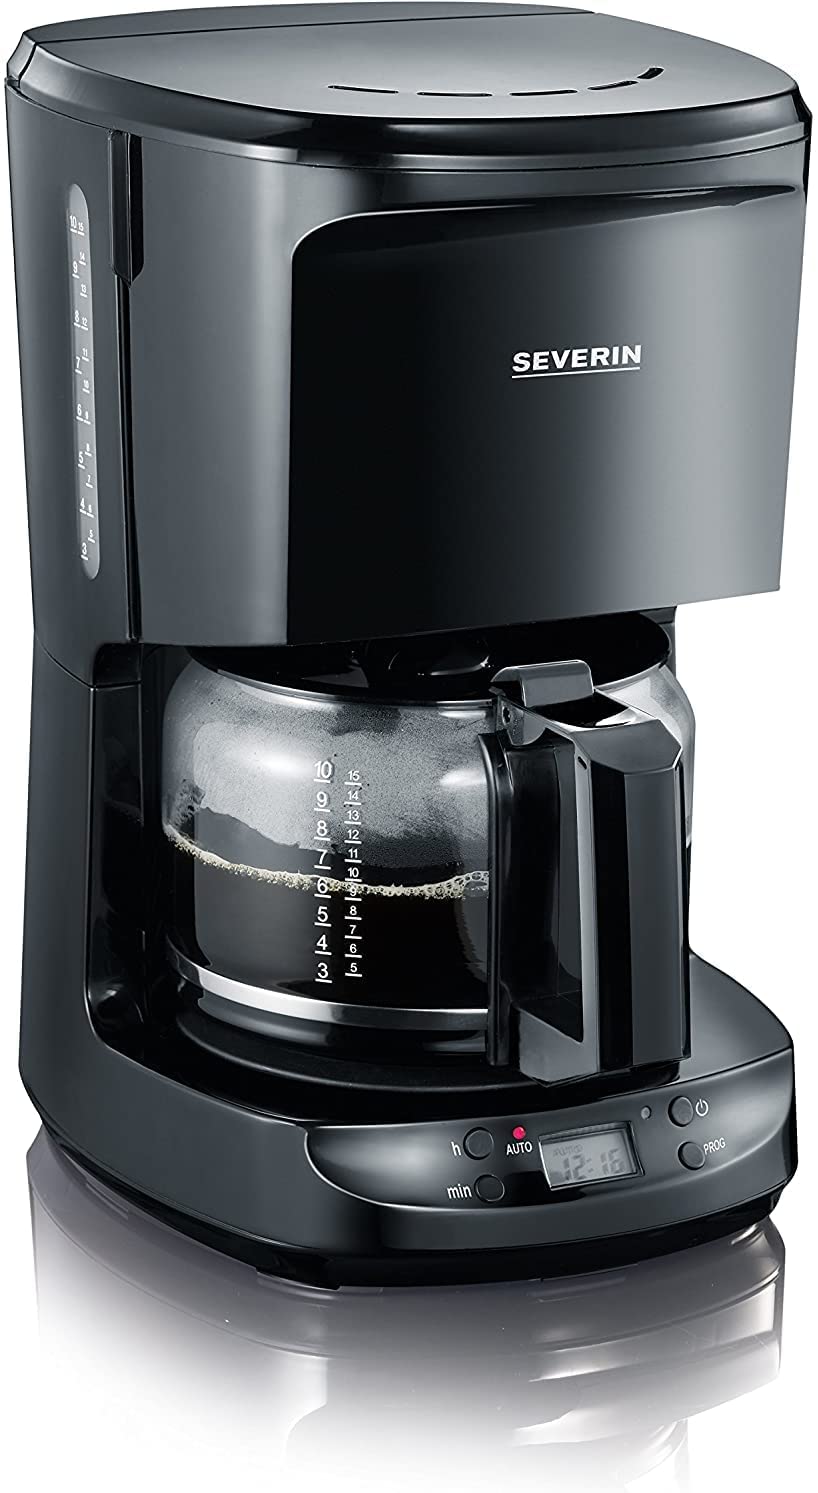 Severin KA 4182 Coffee Machine with Timer Start – Black